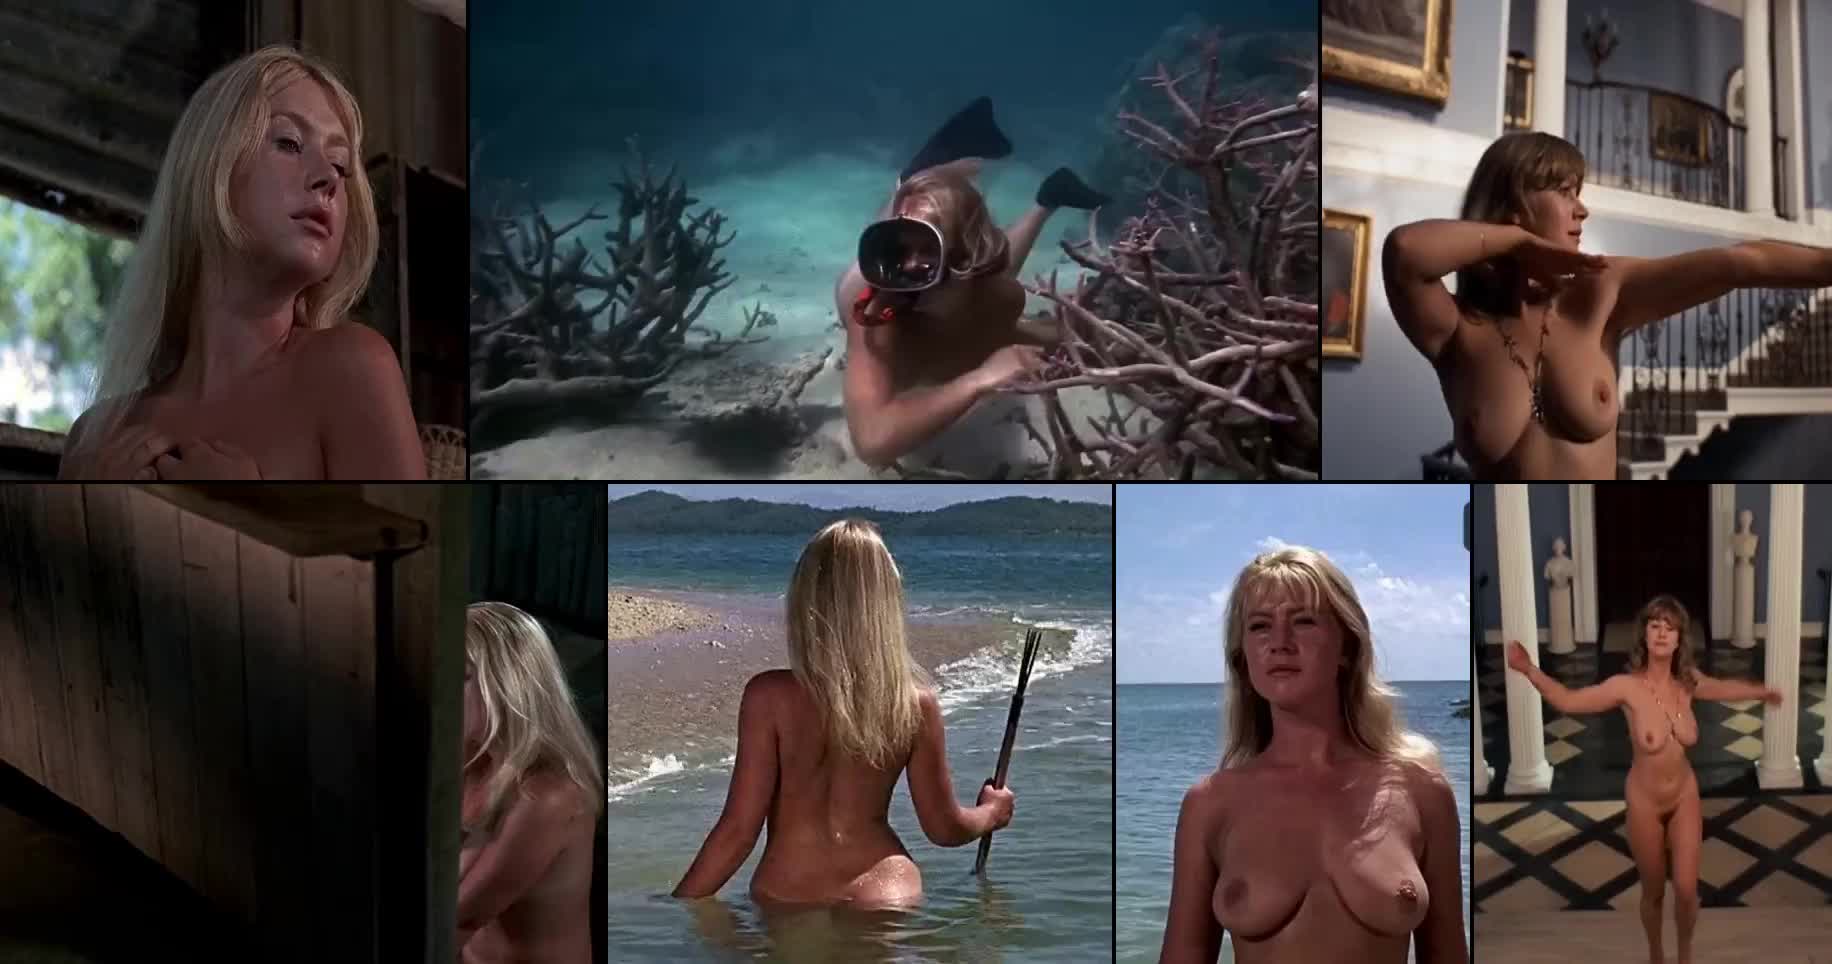 Helen mirre nude - 🧡 Helen Mirren Nude The Fappening - Page 5 - FappeningG...